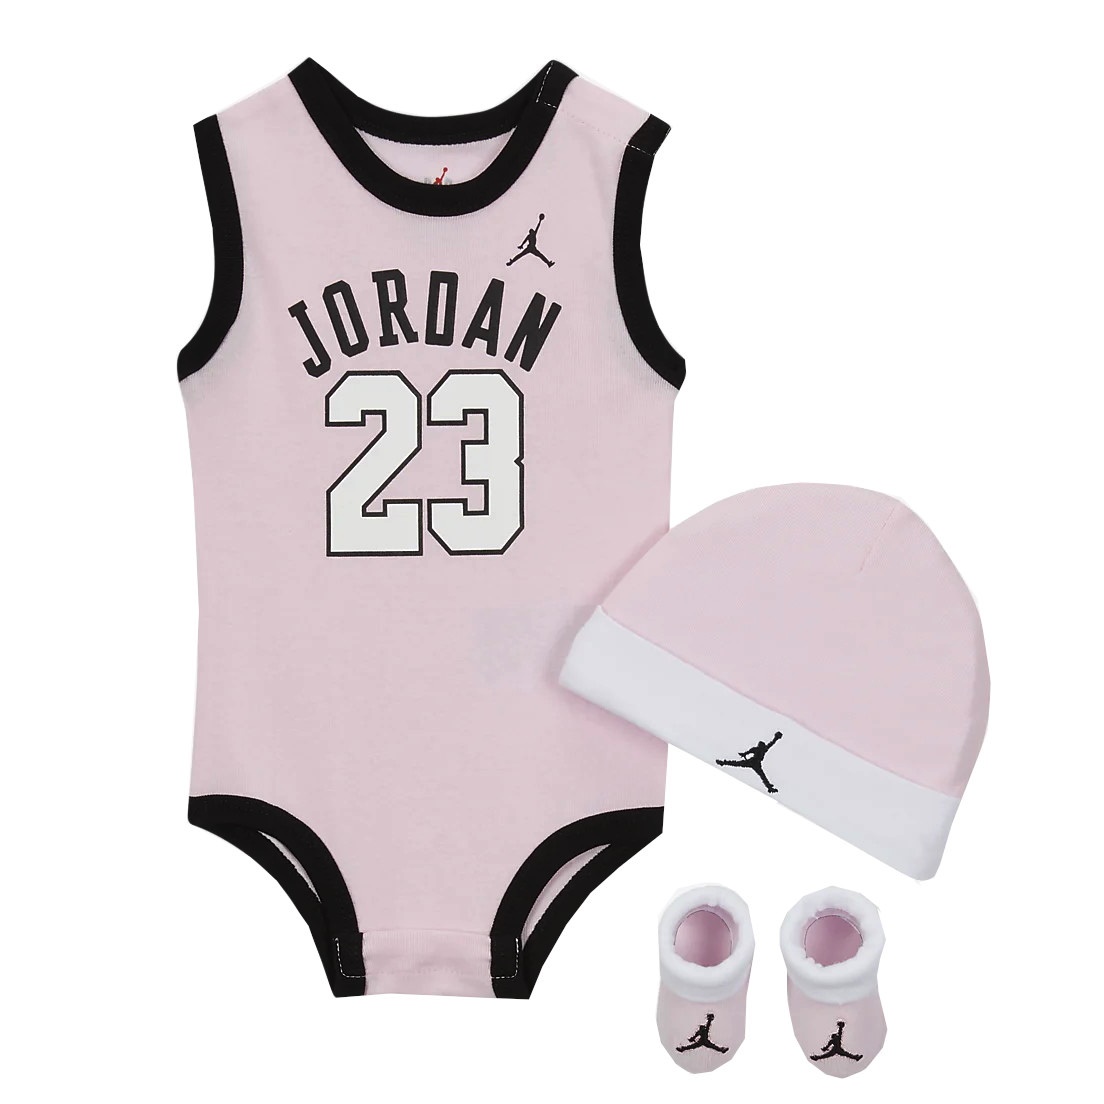 jordan-infants-j23-jersey-hat-bodysuit-bootie-3-piece-set-0-6m-pink-1.jpg